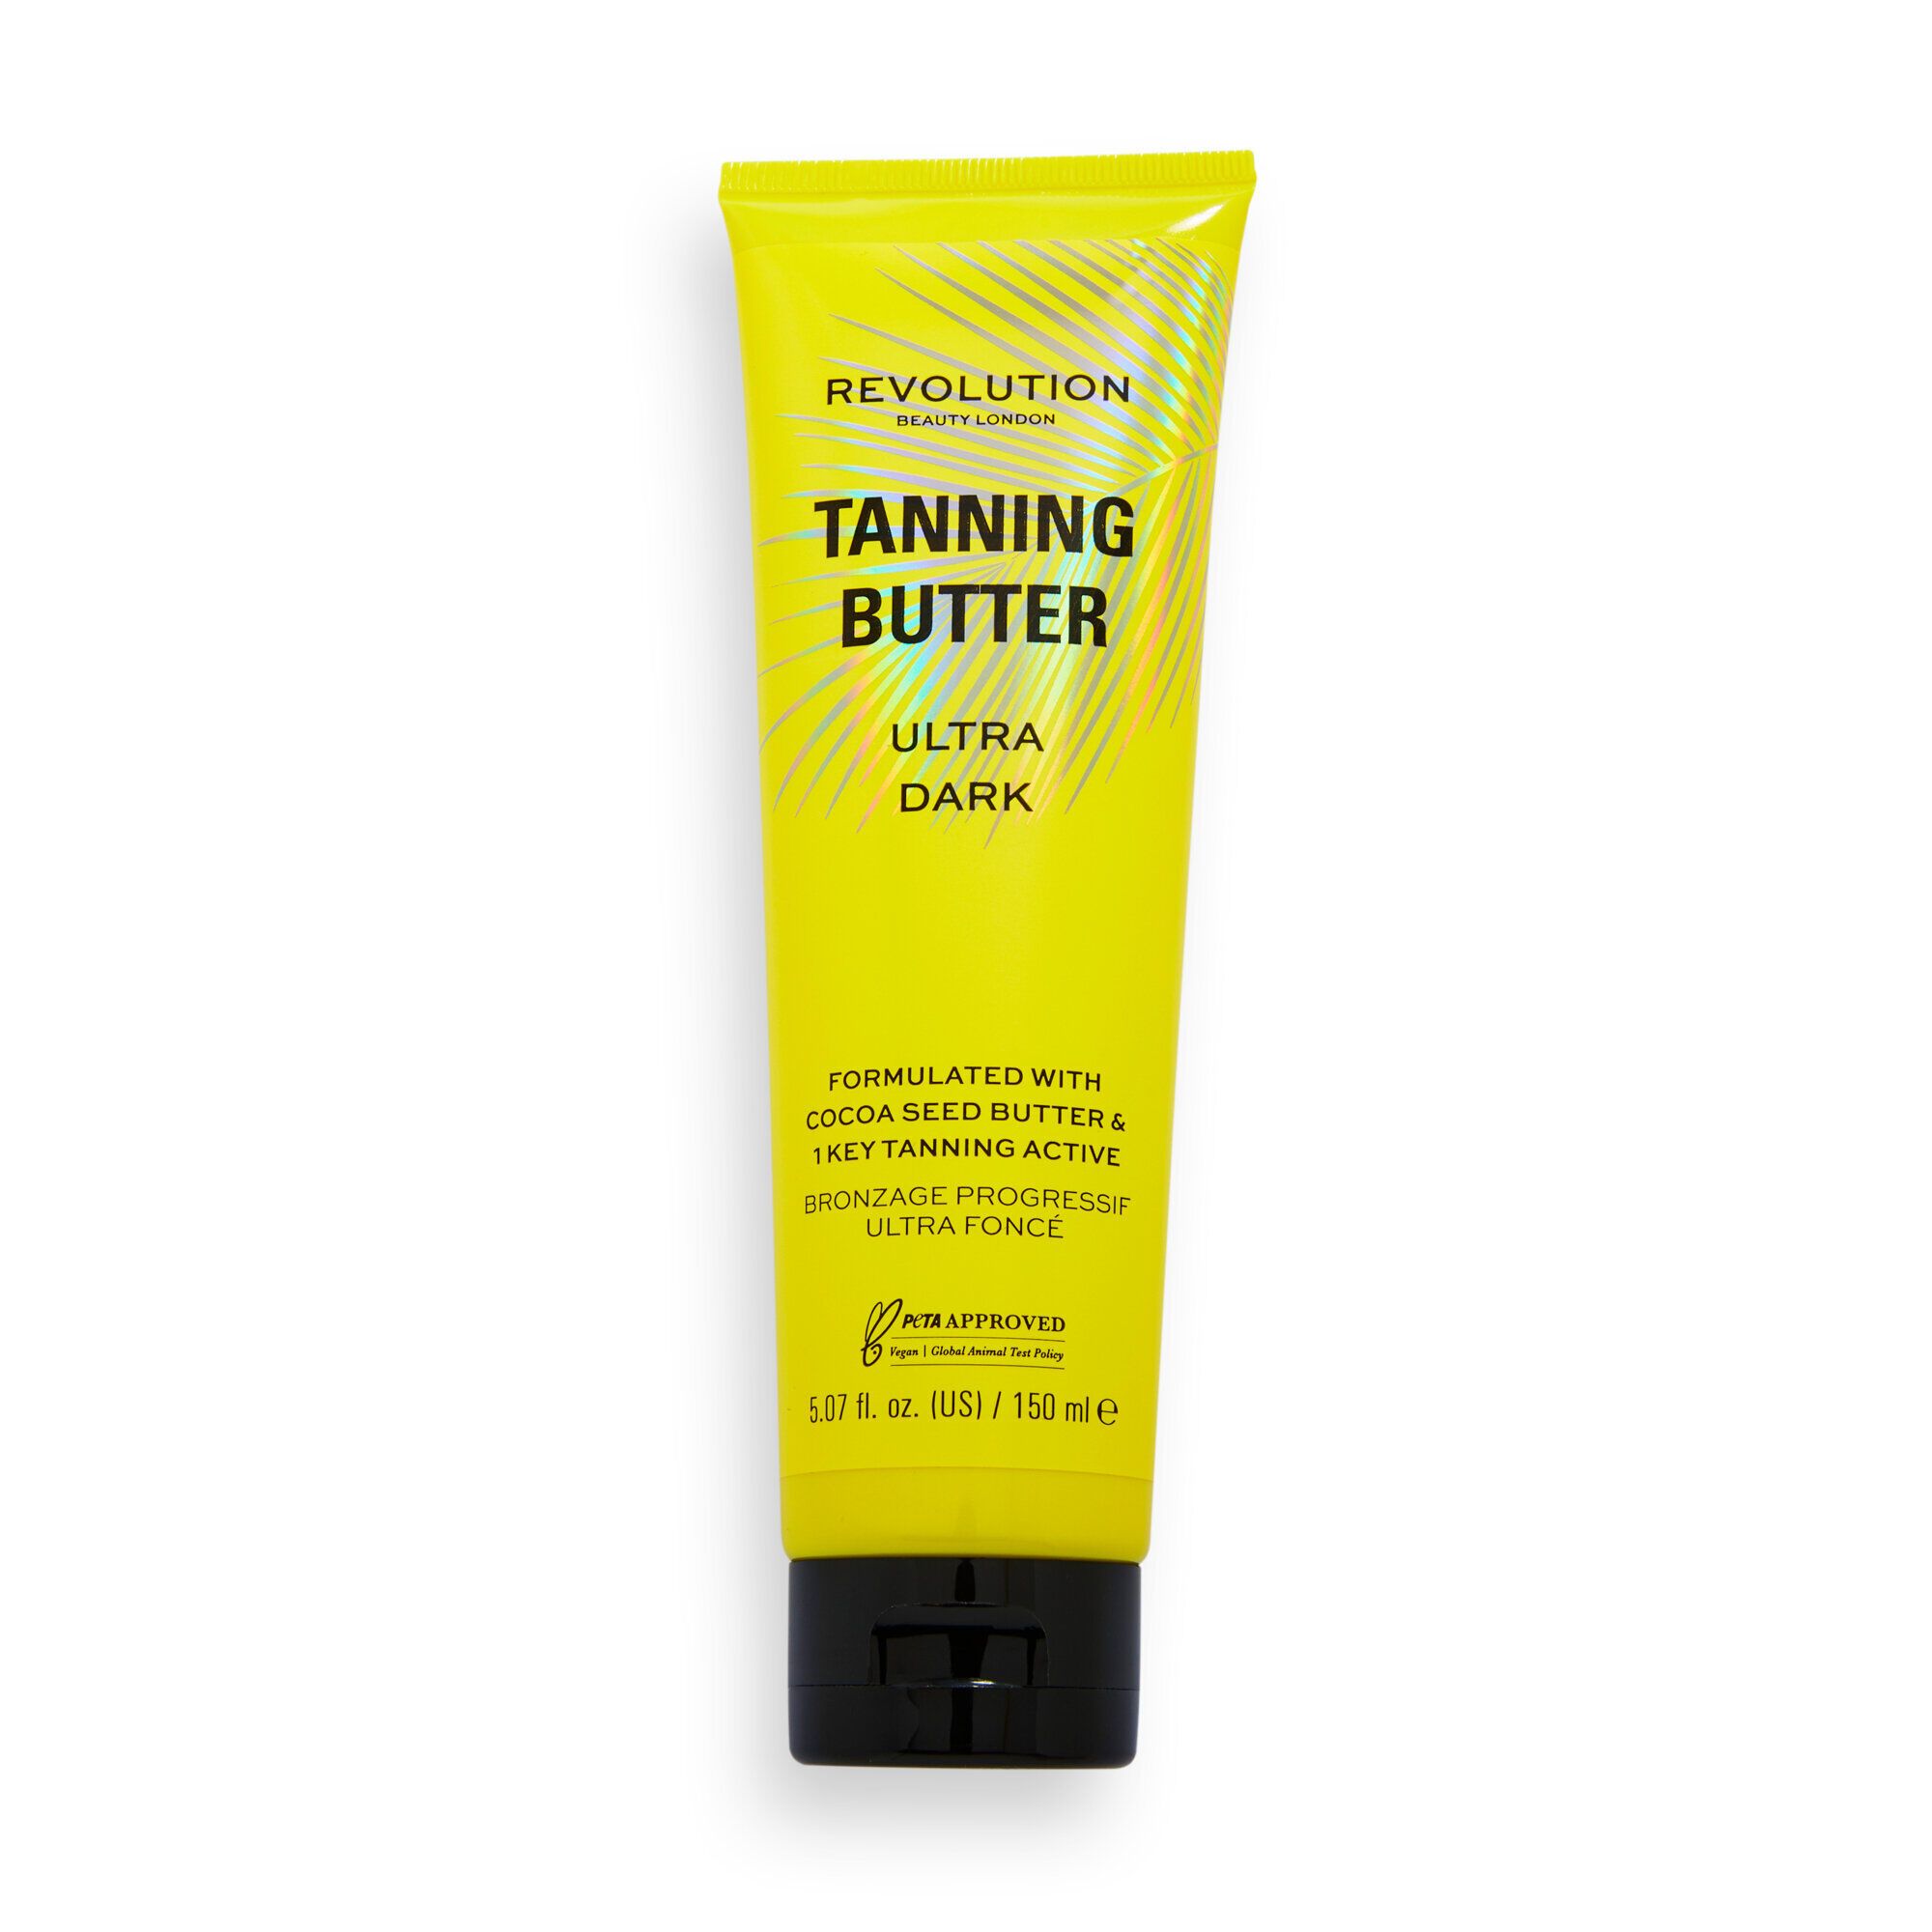 Tanning Butter